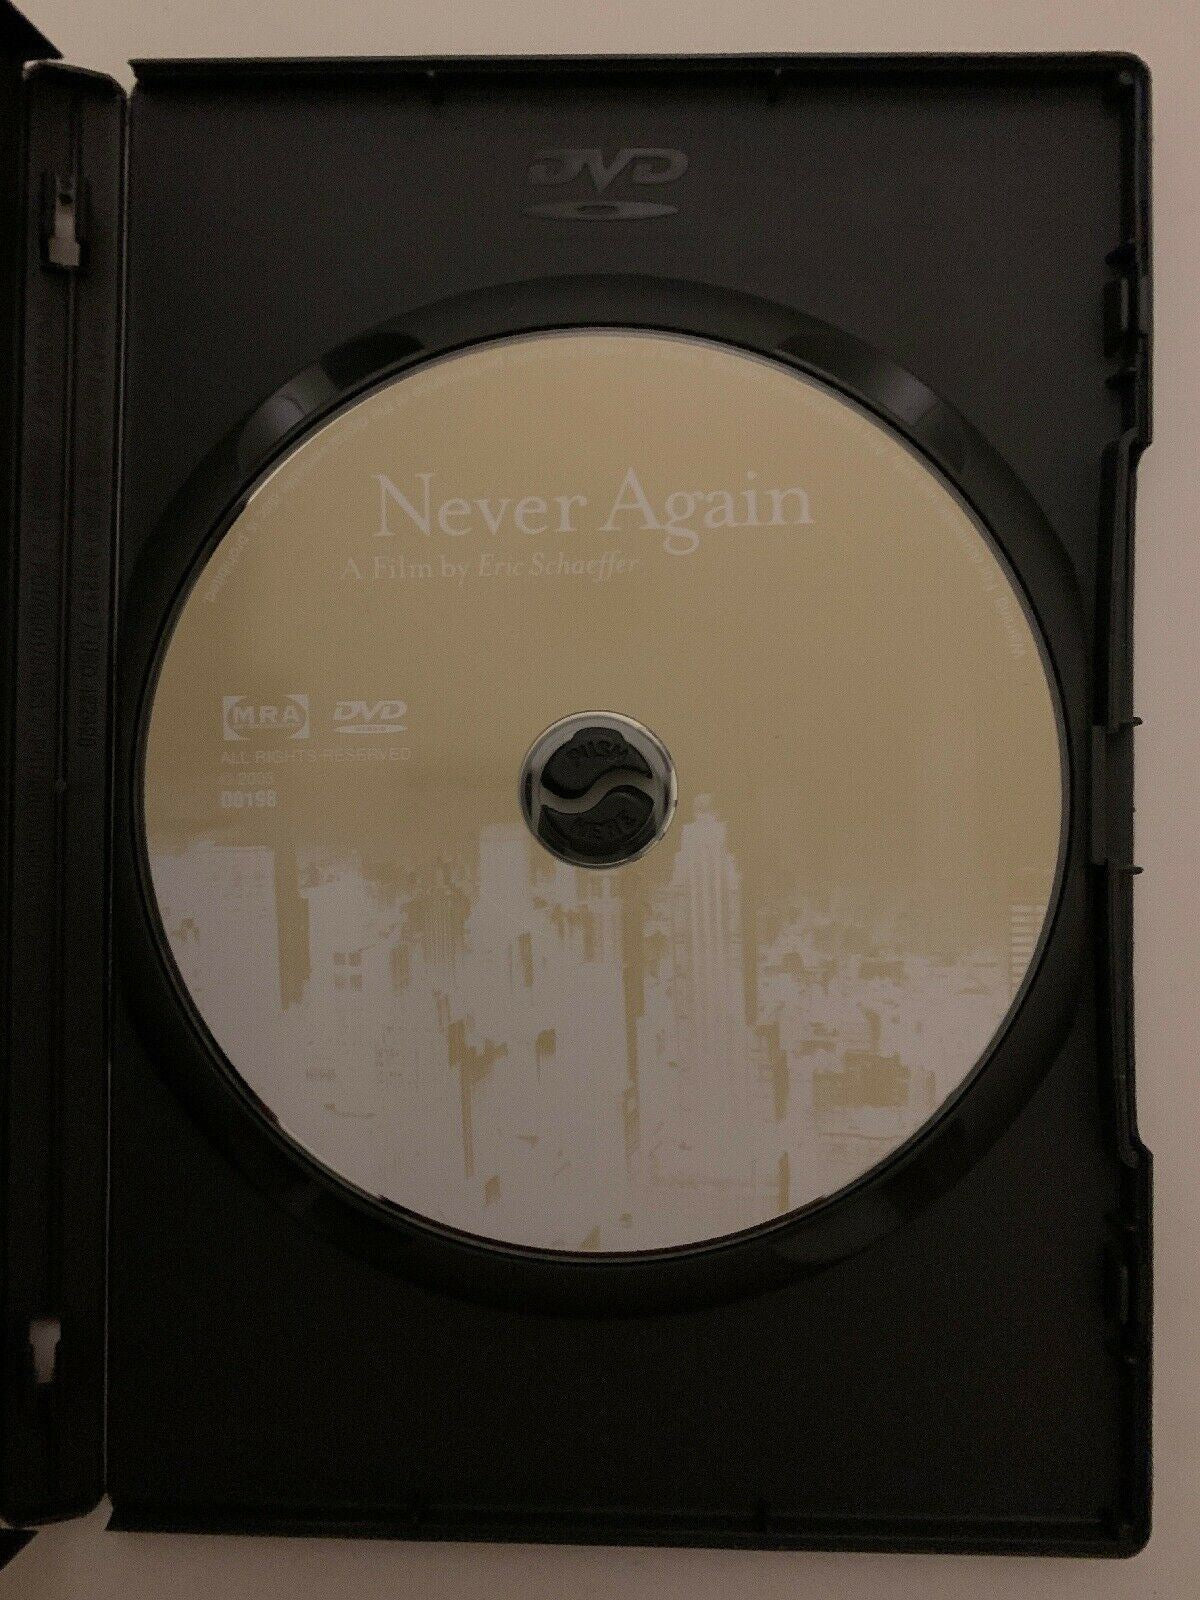 Never Again (DVD, 2001) Jeffrey Tambor, Jill Clayburgh, Eric Schaeffer. Region 4